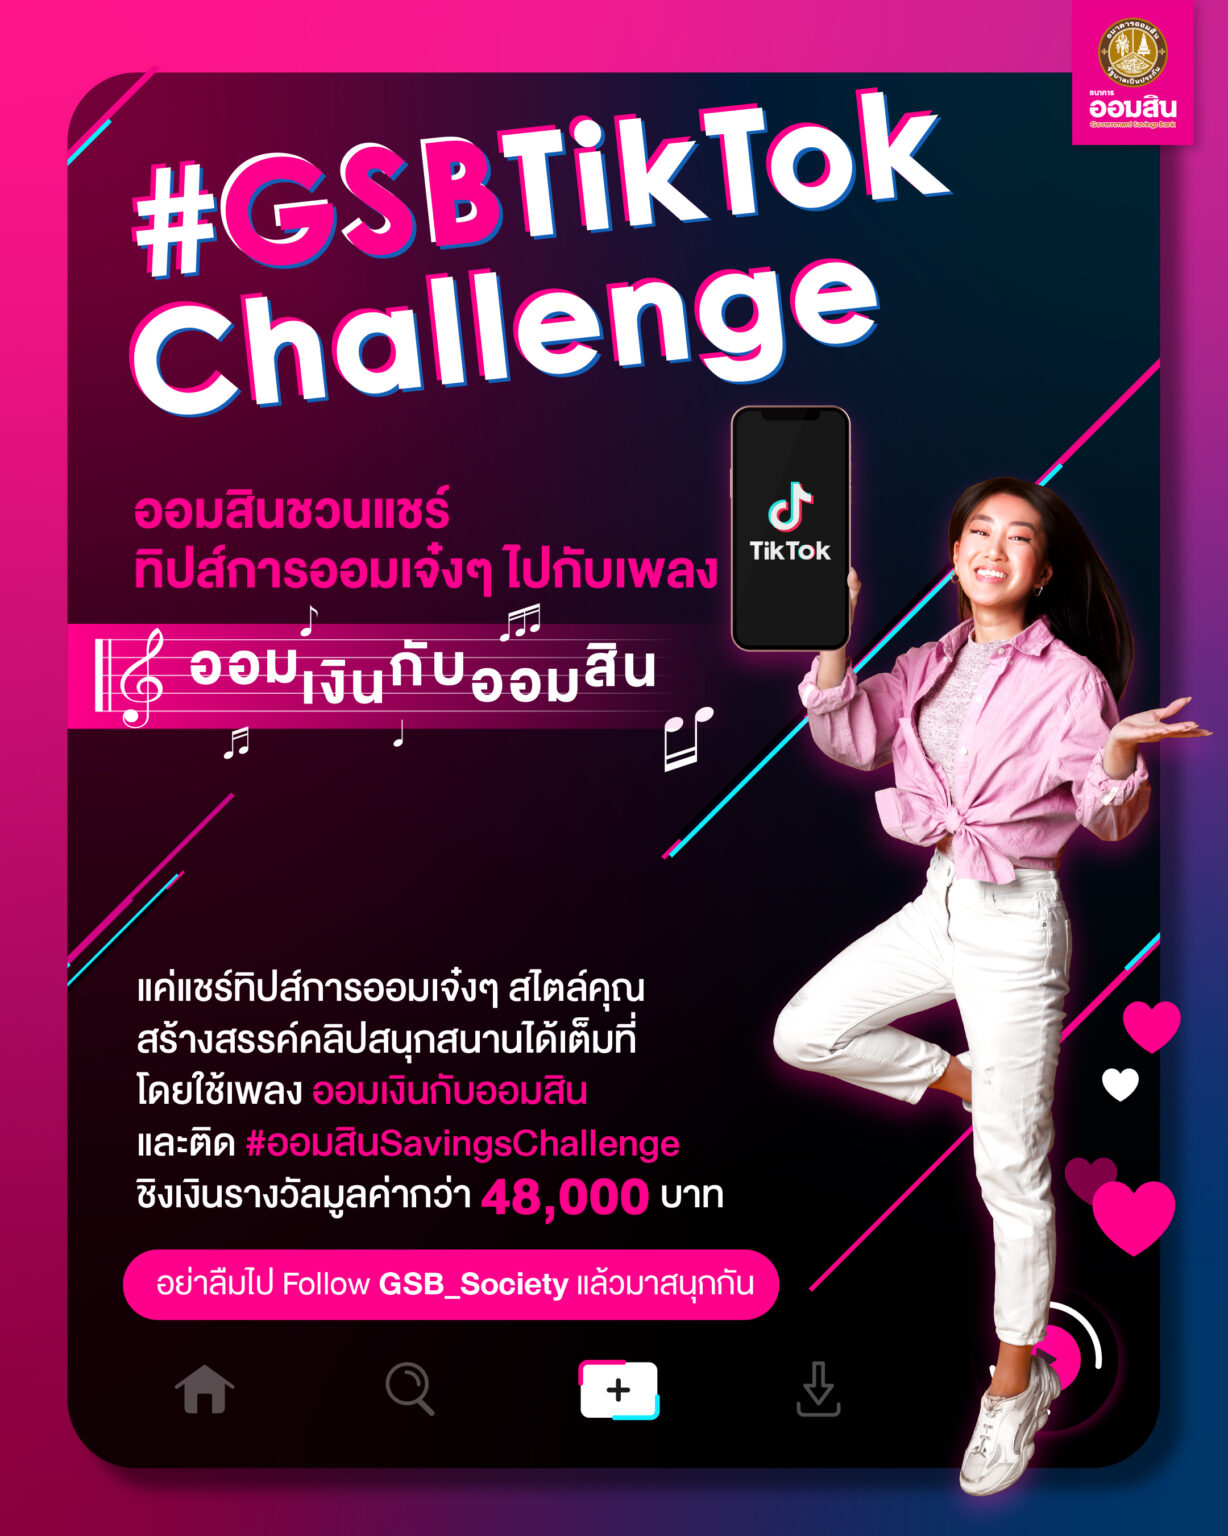 GSB TikTok Challenge